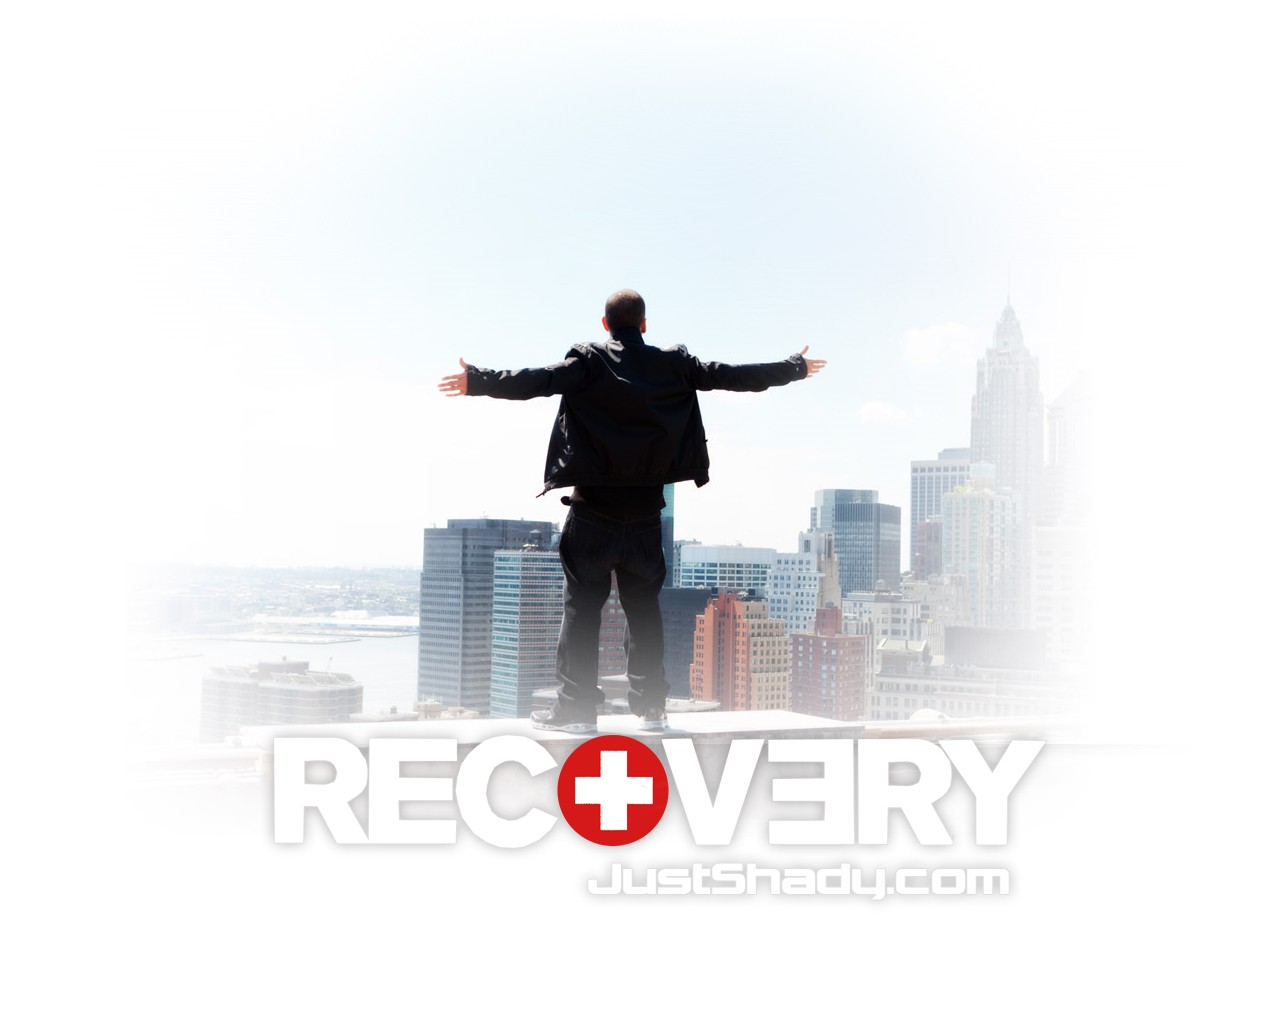 Eminem Recovery Wallpaper